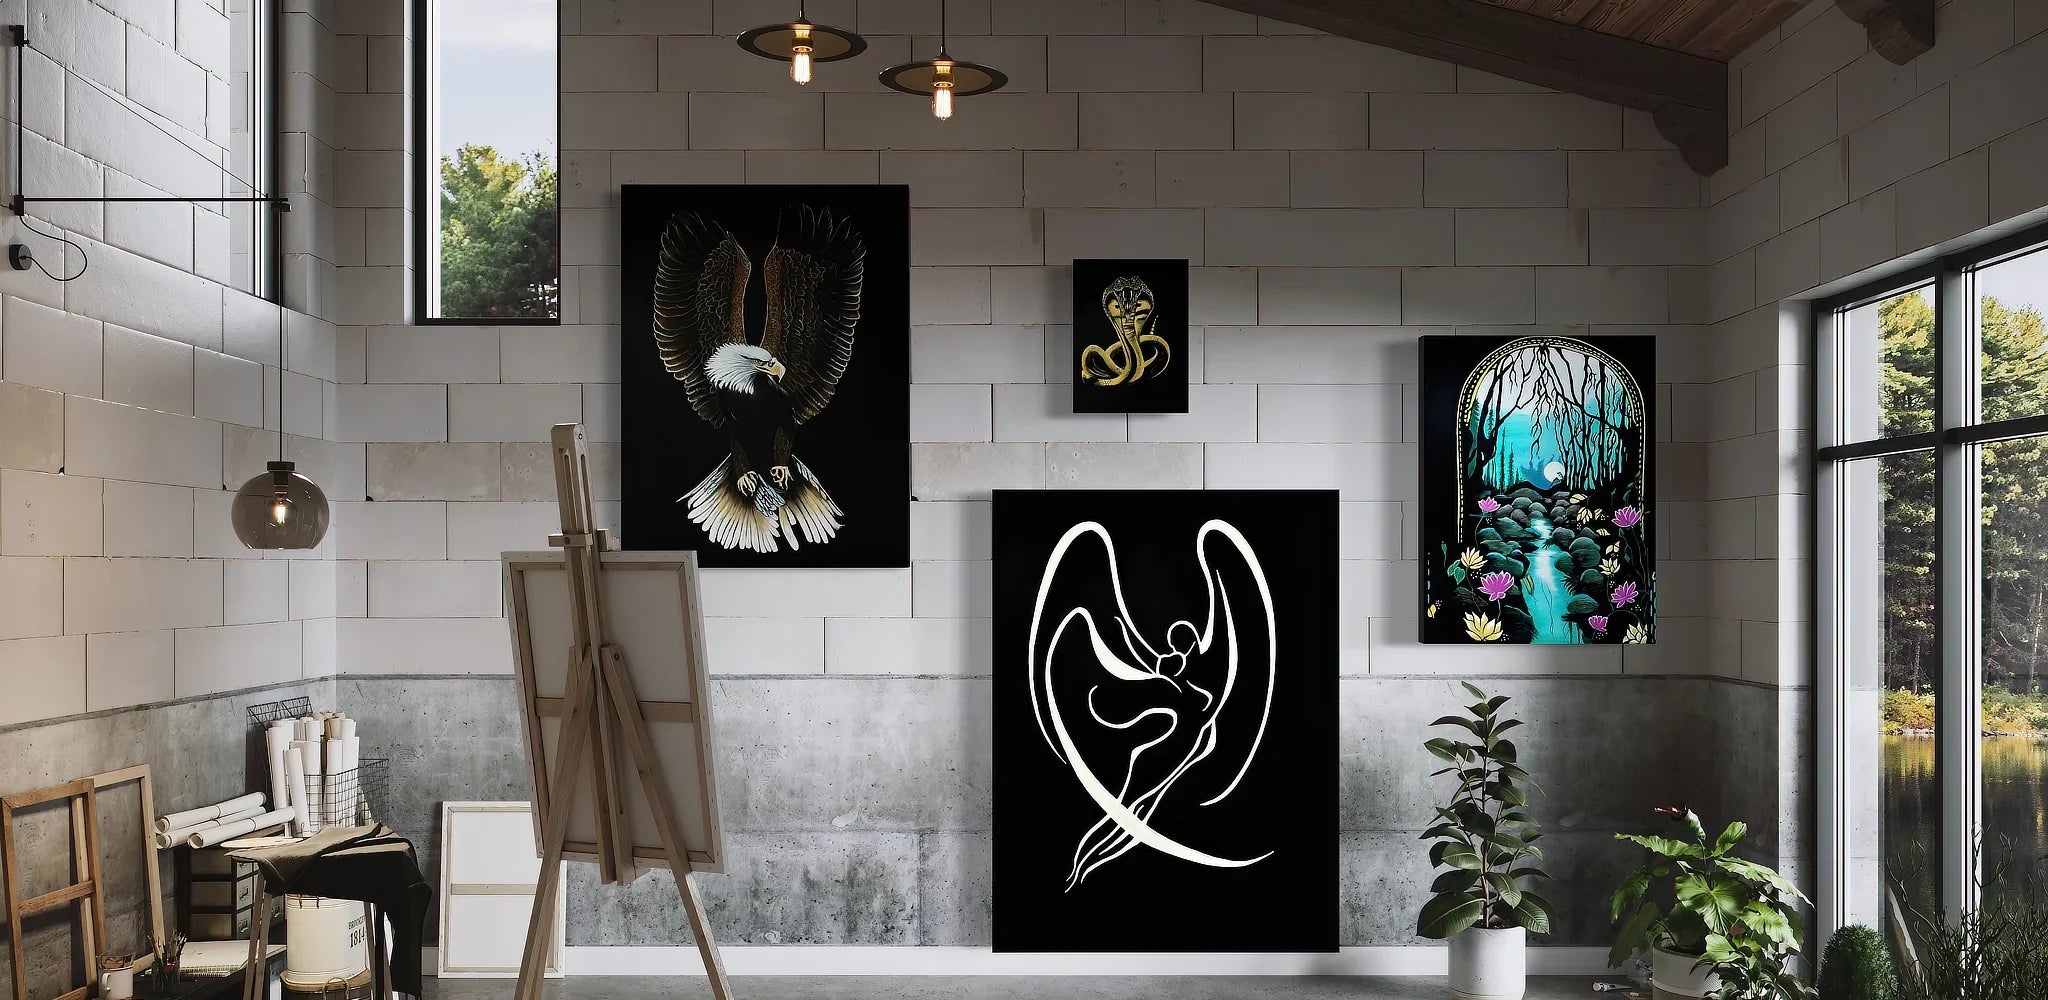 Art studio with artwork by Sonia Malboeuf